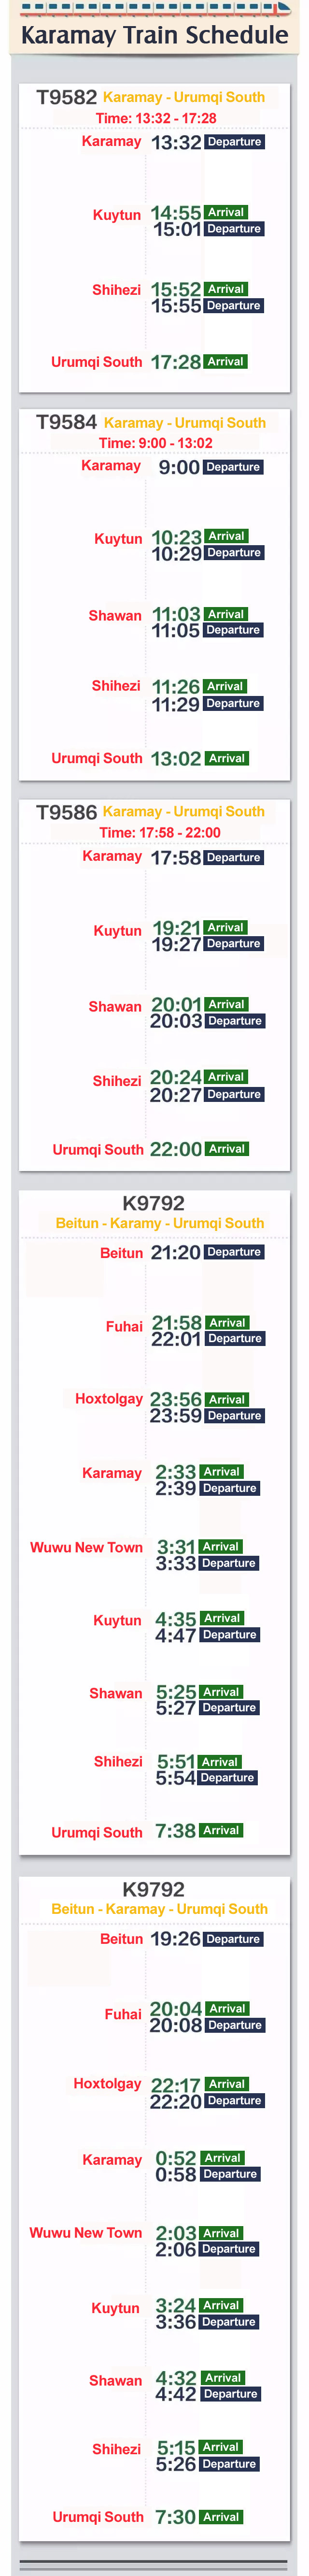 Karamay train schedule